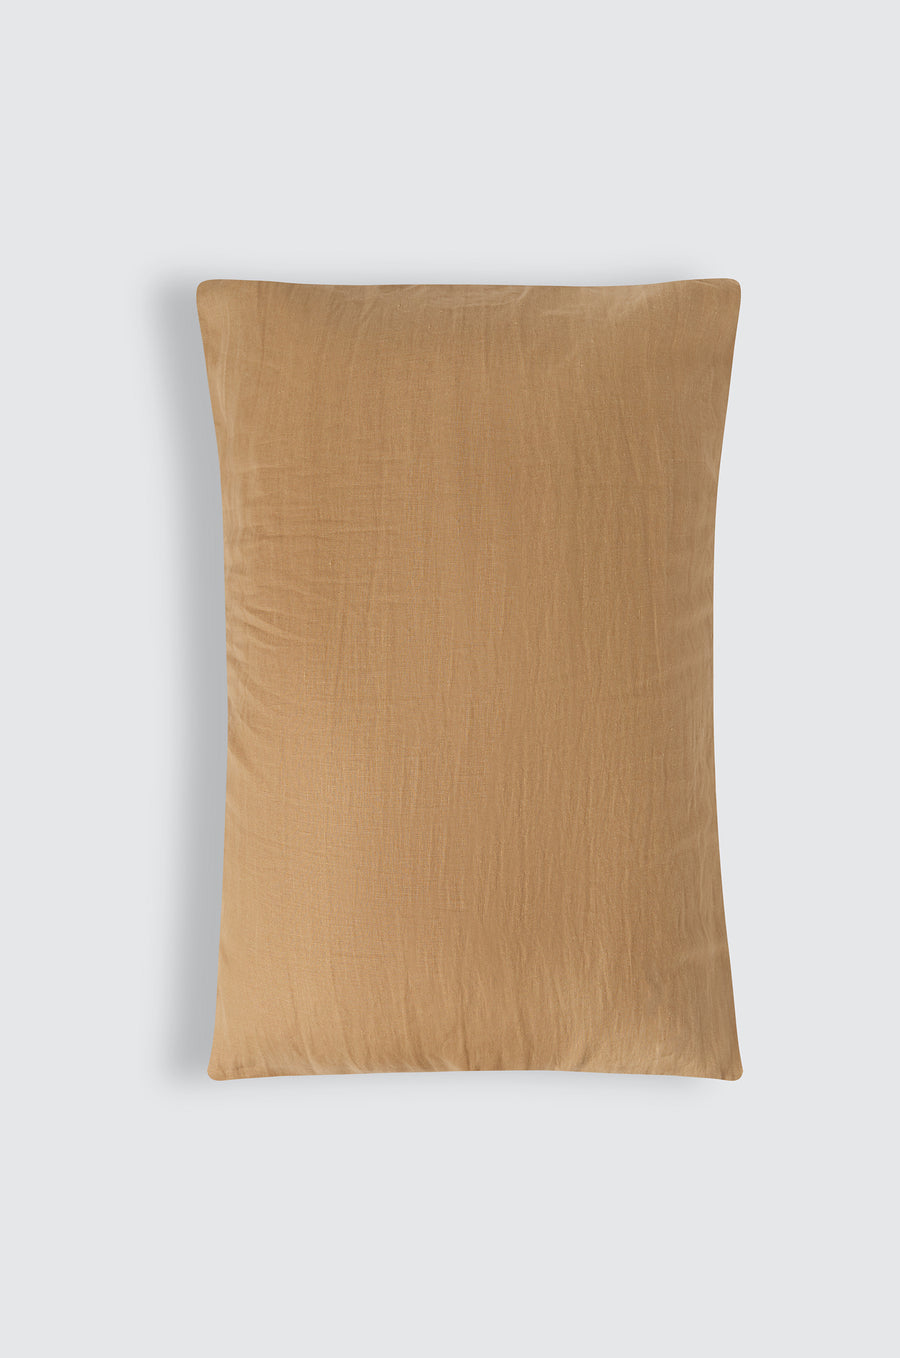 linen pillow slips in walnut